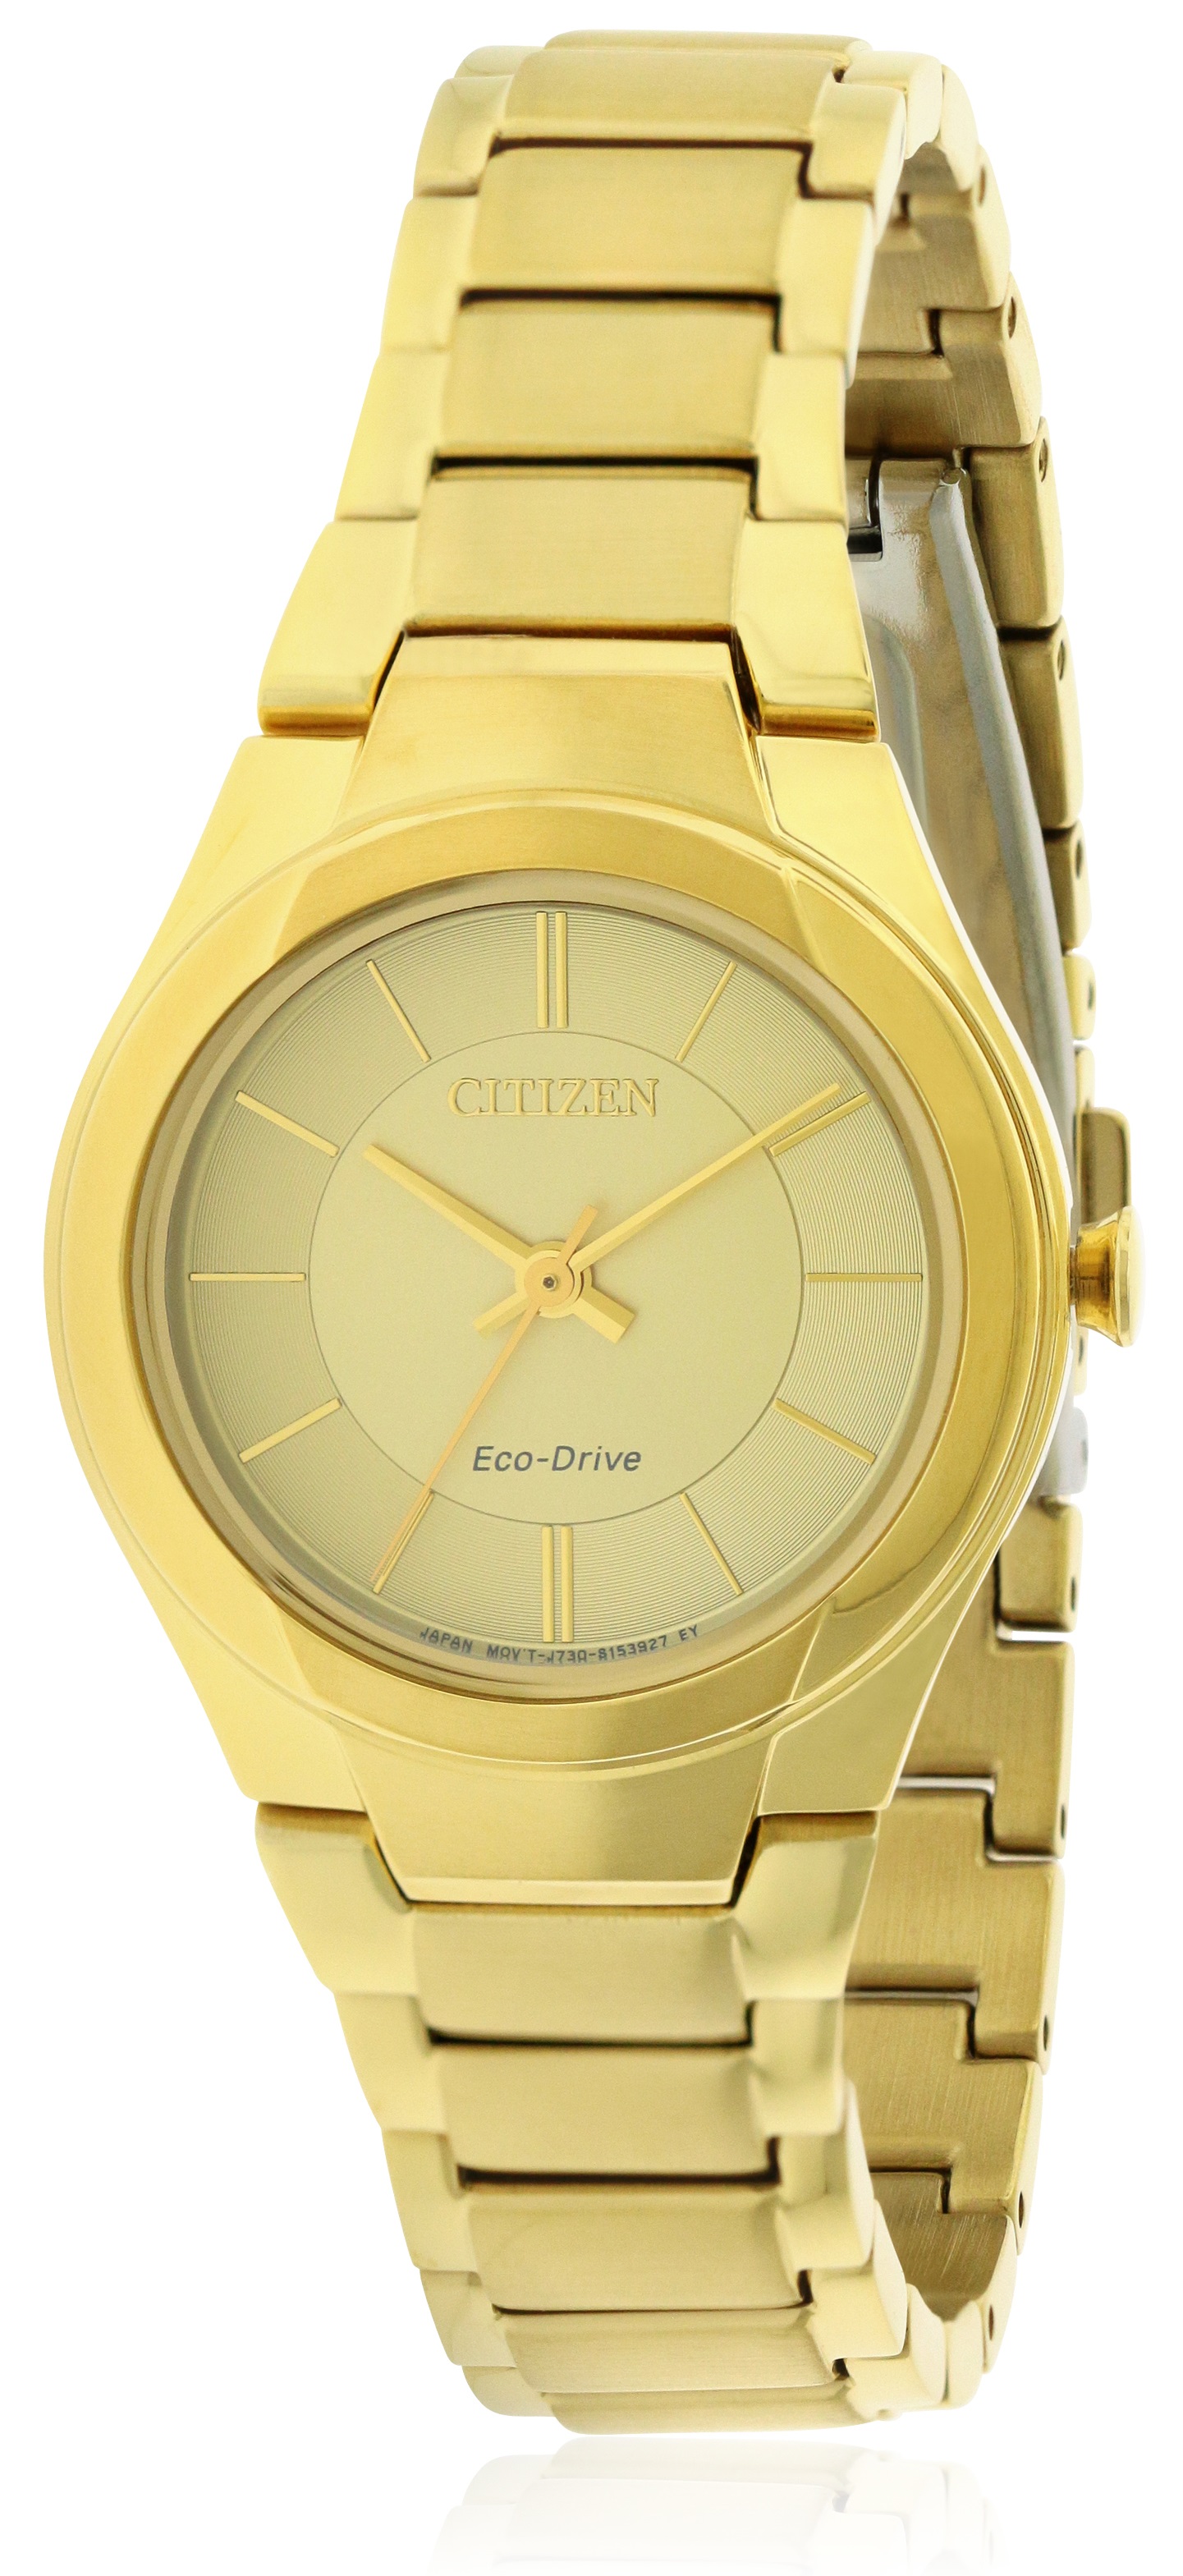 Citizen Eco-Drive Paradigm Gold-Tone Ladies Watch FE2092-57P | eBay